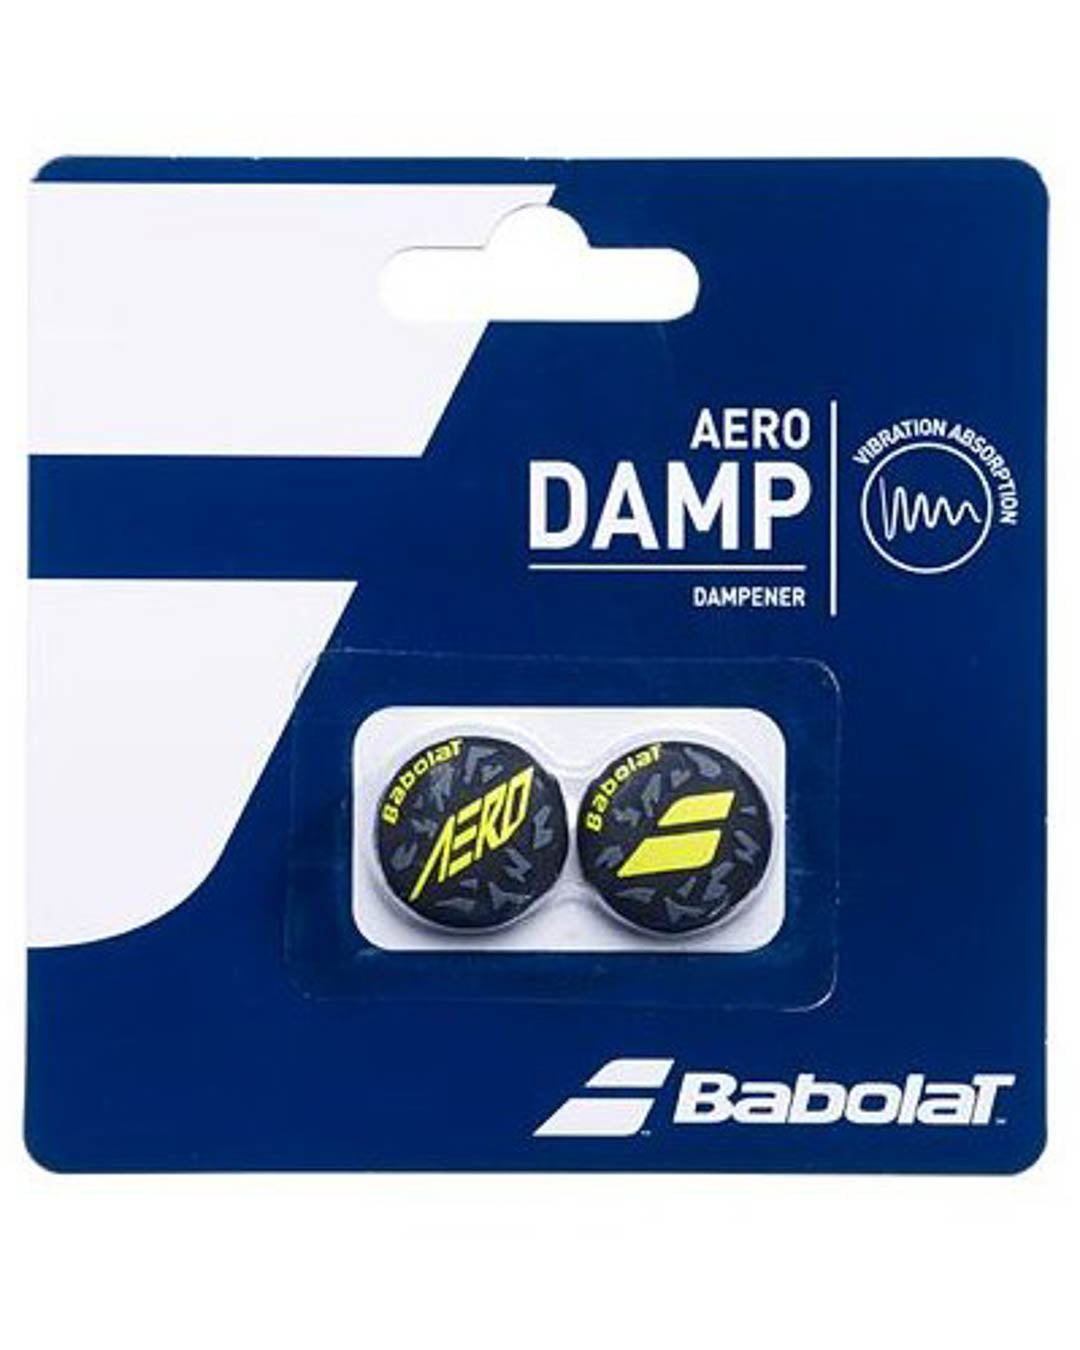 Babolat Aero Damp 2023